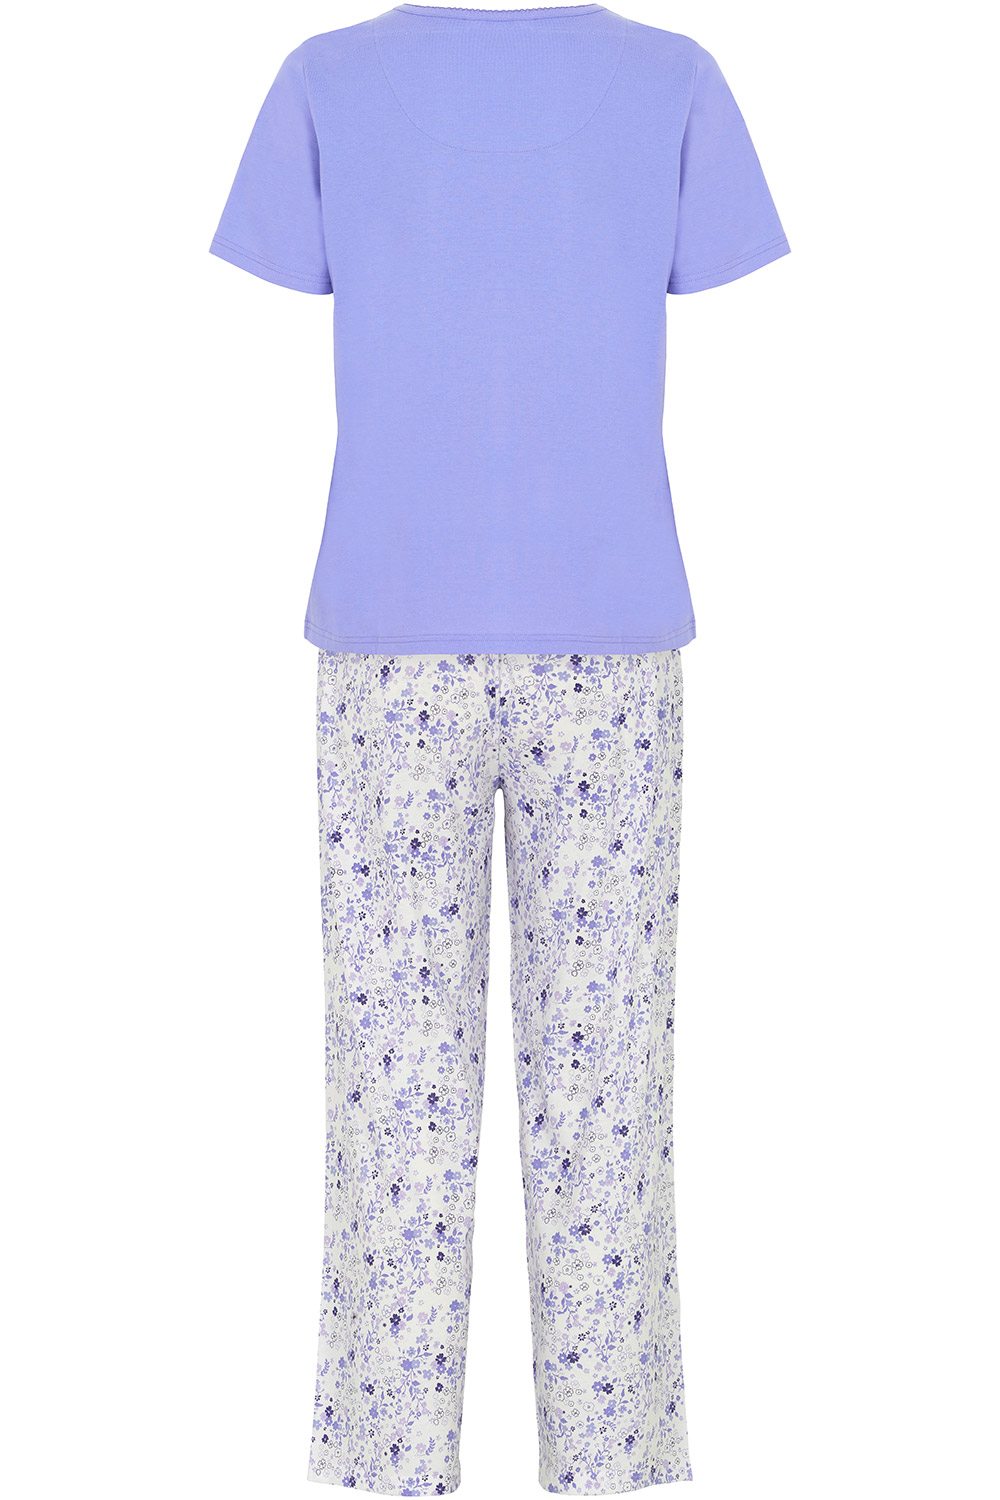 Ditsy Floral Pyjamas